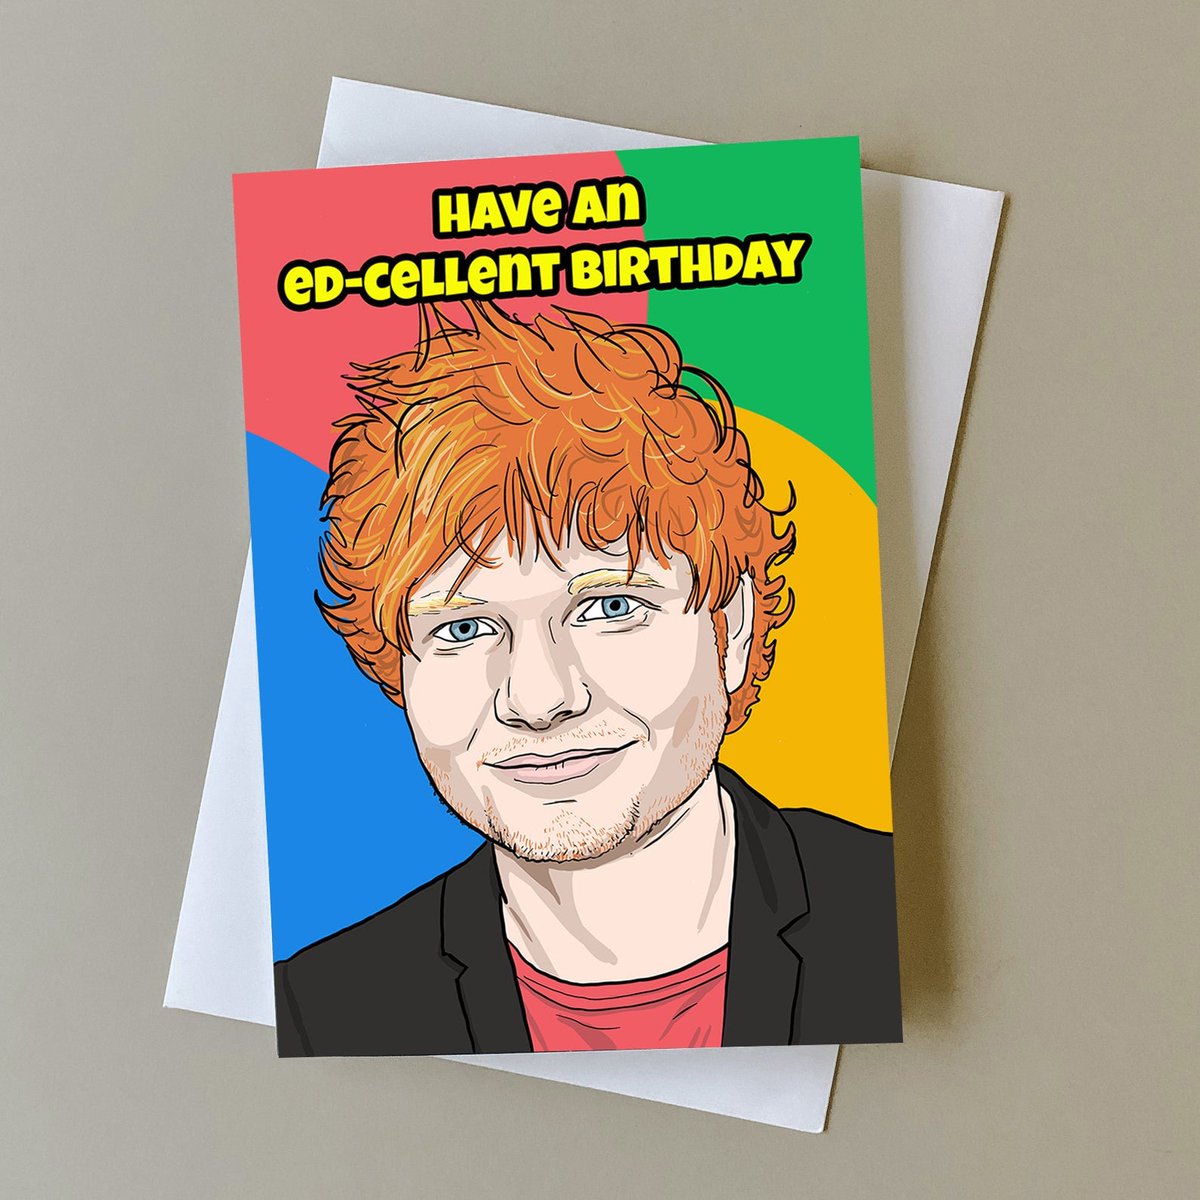 Ed Sheeran birthday card, gift for Ed Sheeran fan, greeting card for music fans, music birthday gift, personalised card tuppu.net/765800d3 #giftideas #wallArt #greetingcards #popCulture #newWave #EdSheeranCard